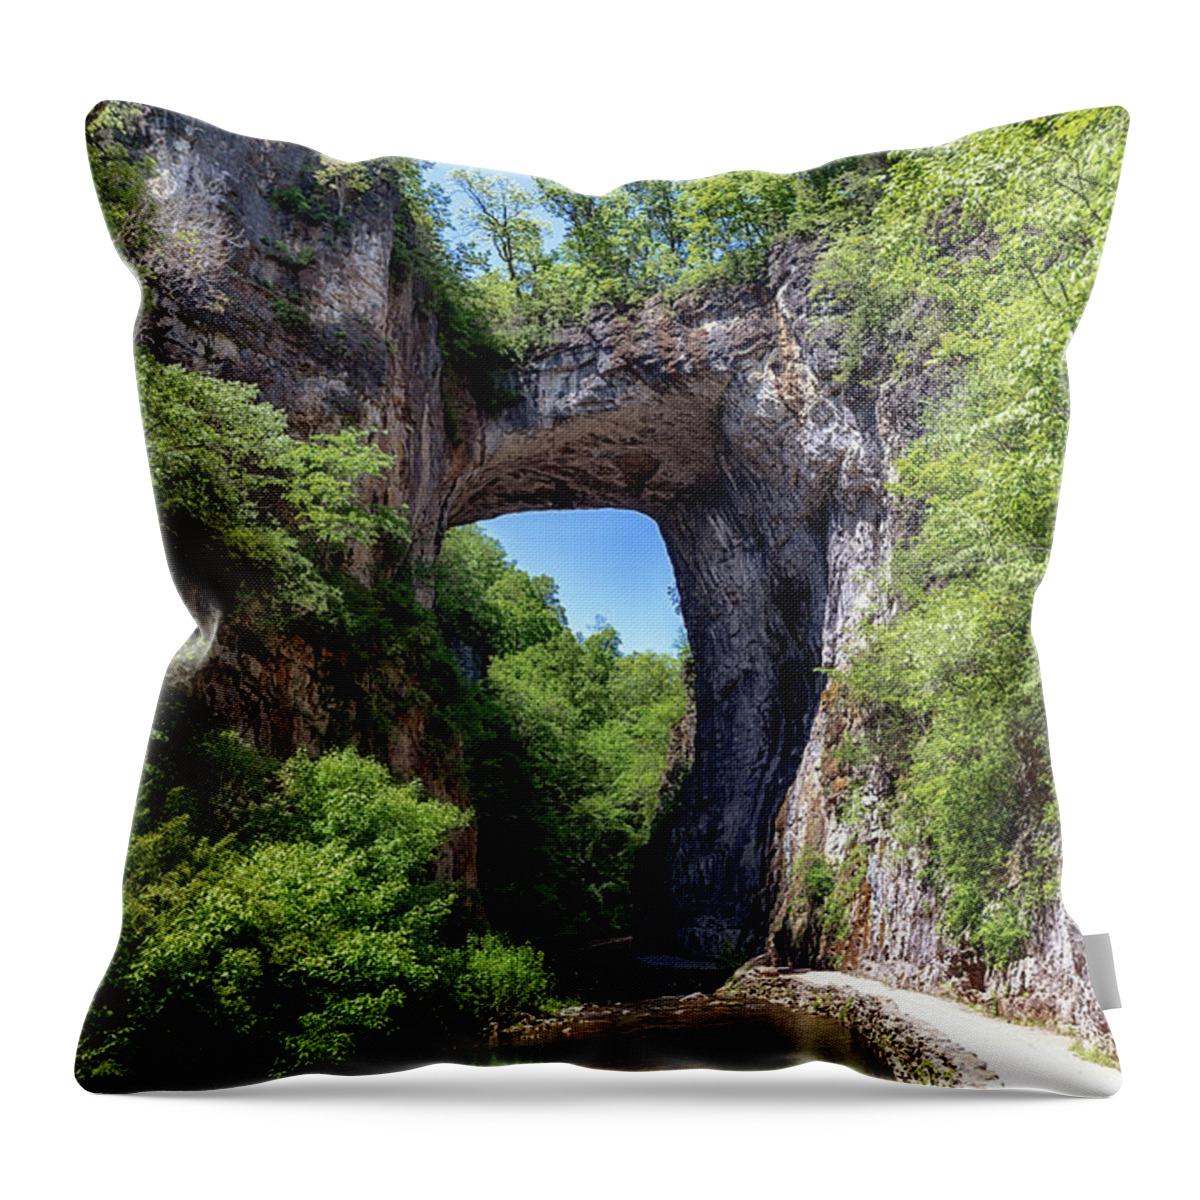 Natural Bridge Throw Pillow featuring the photograph Natural Bridge Virginia by Susan Rissi Tregoning